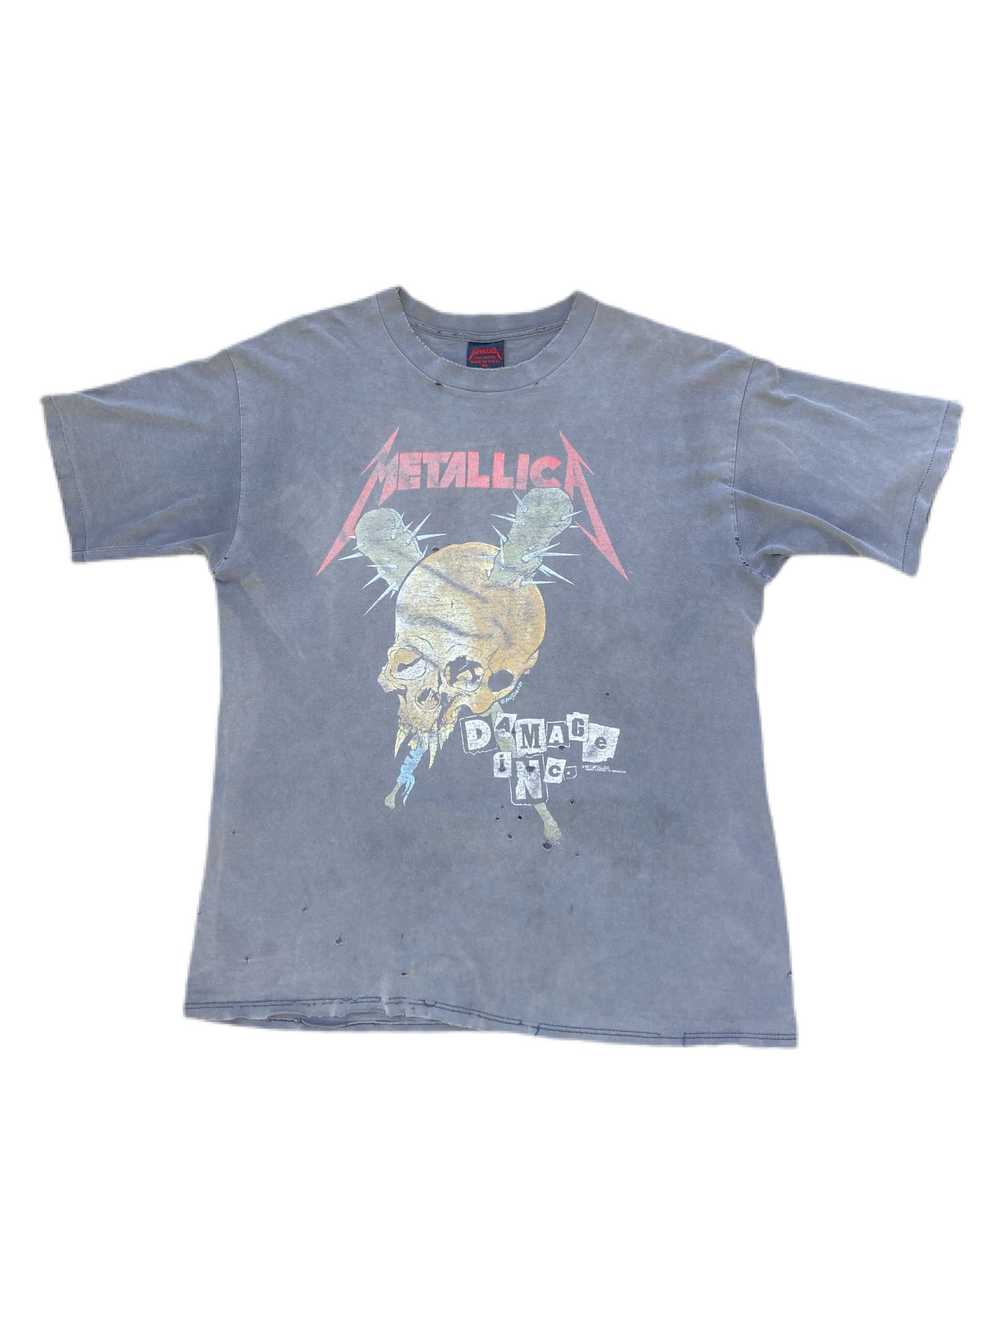 vintage metallica tee shirt damaged justice 1987 - image 1